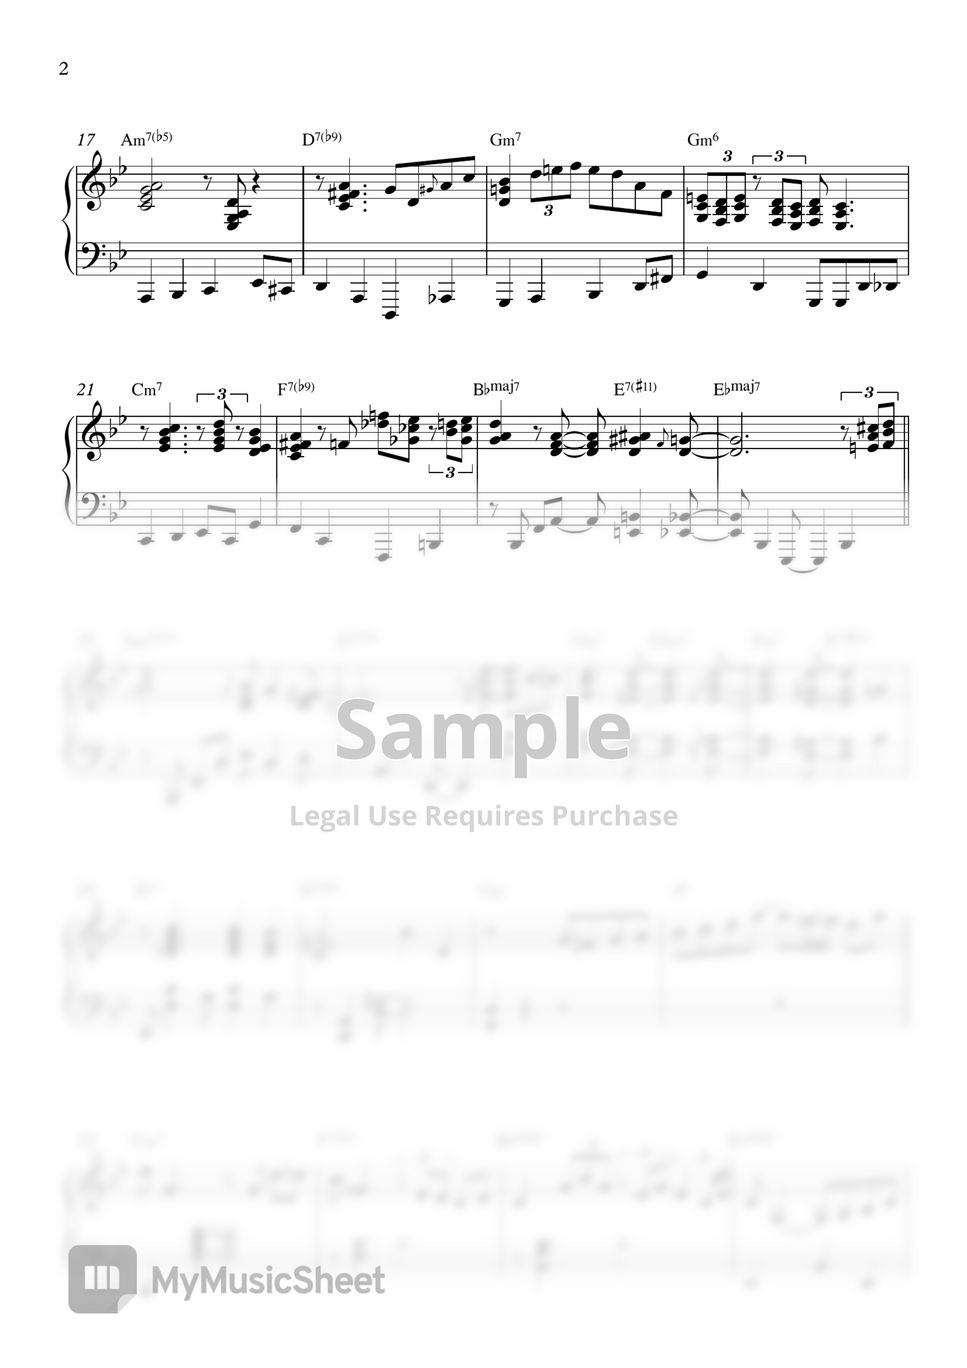 Joseph Kosma - Autumn Leaves (Jazz/Swing/Solo Piano) by Jusilver